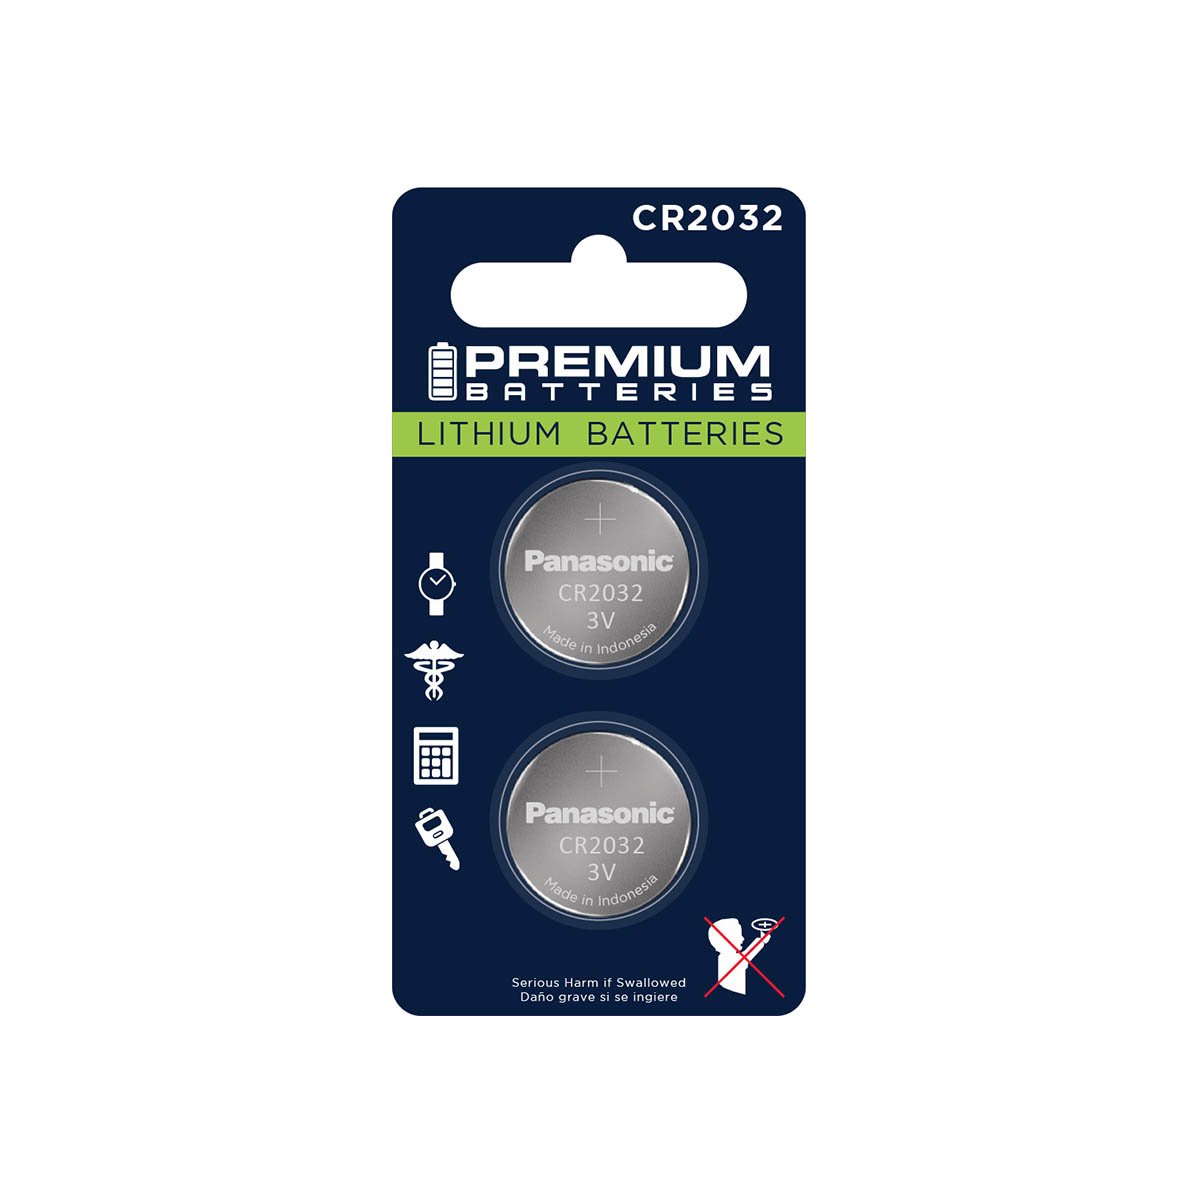 Premium Batteries CR2032 Battery 3V Lithium Coin Cell (2 Panasonic Batteries) (Child Resistant Packaging)